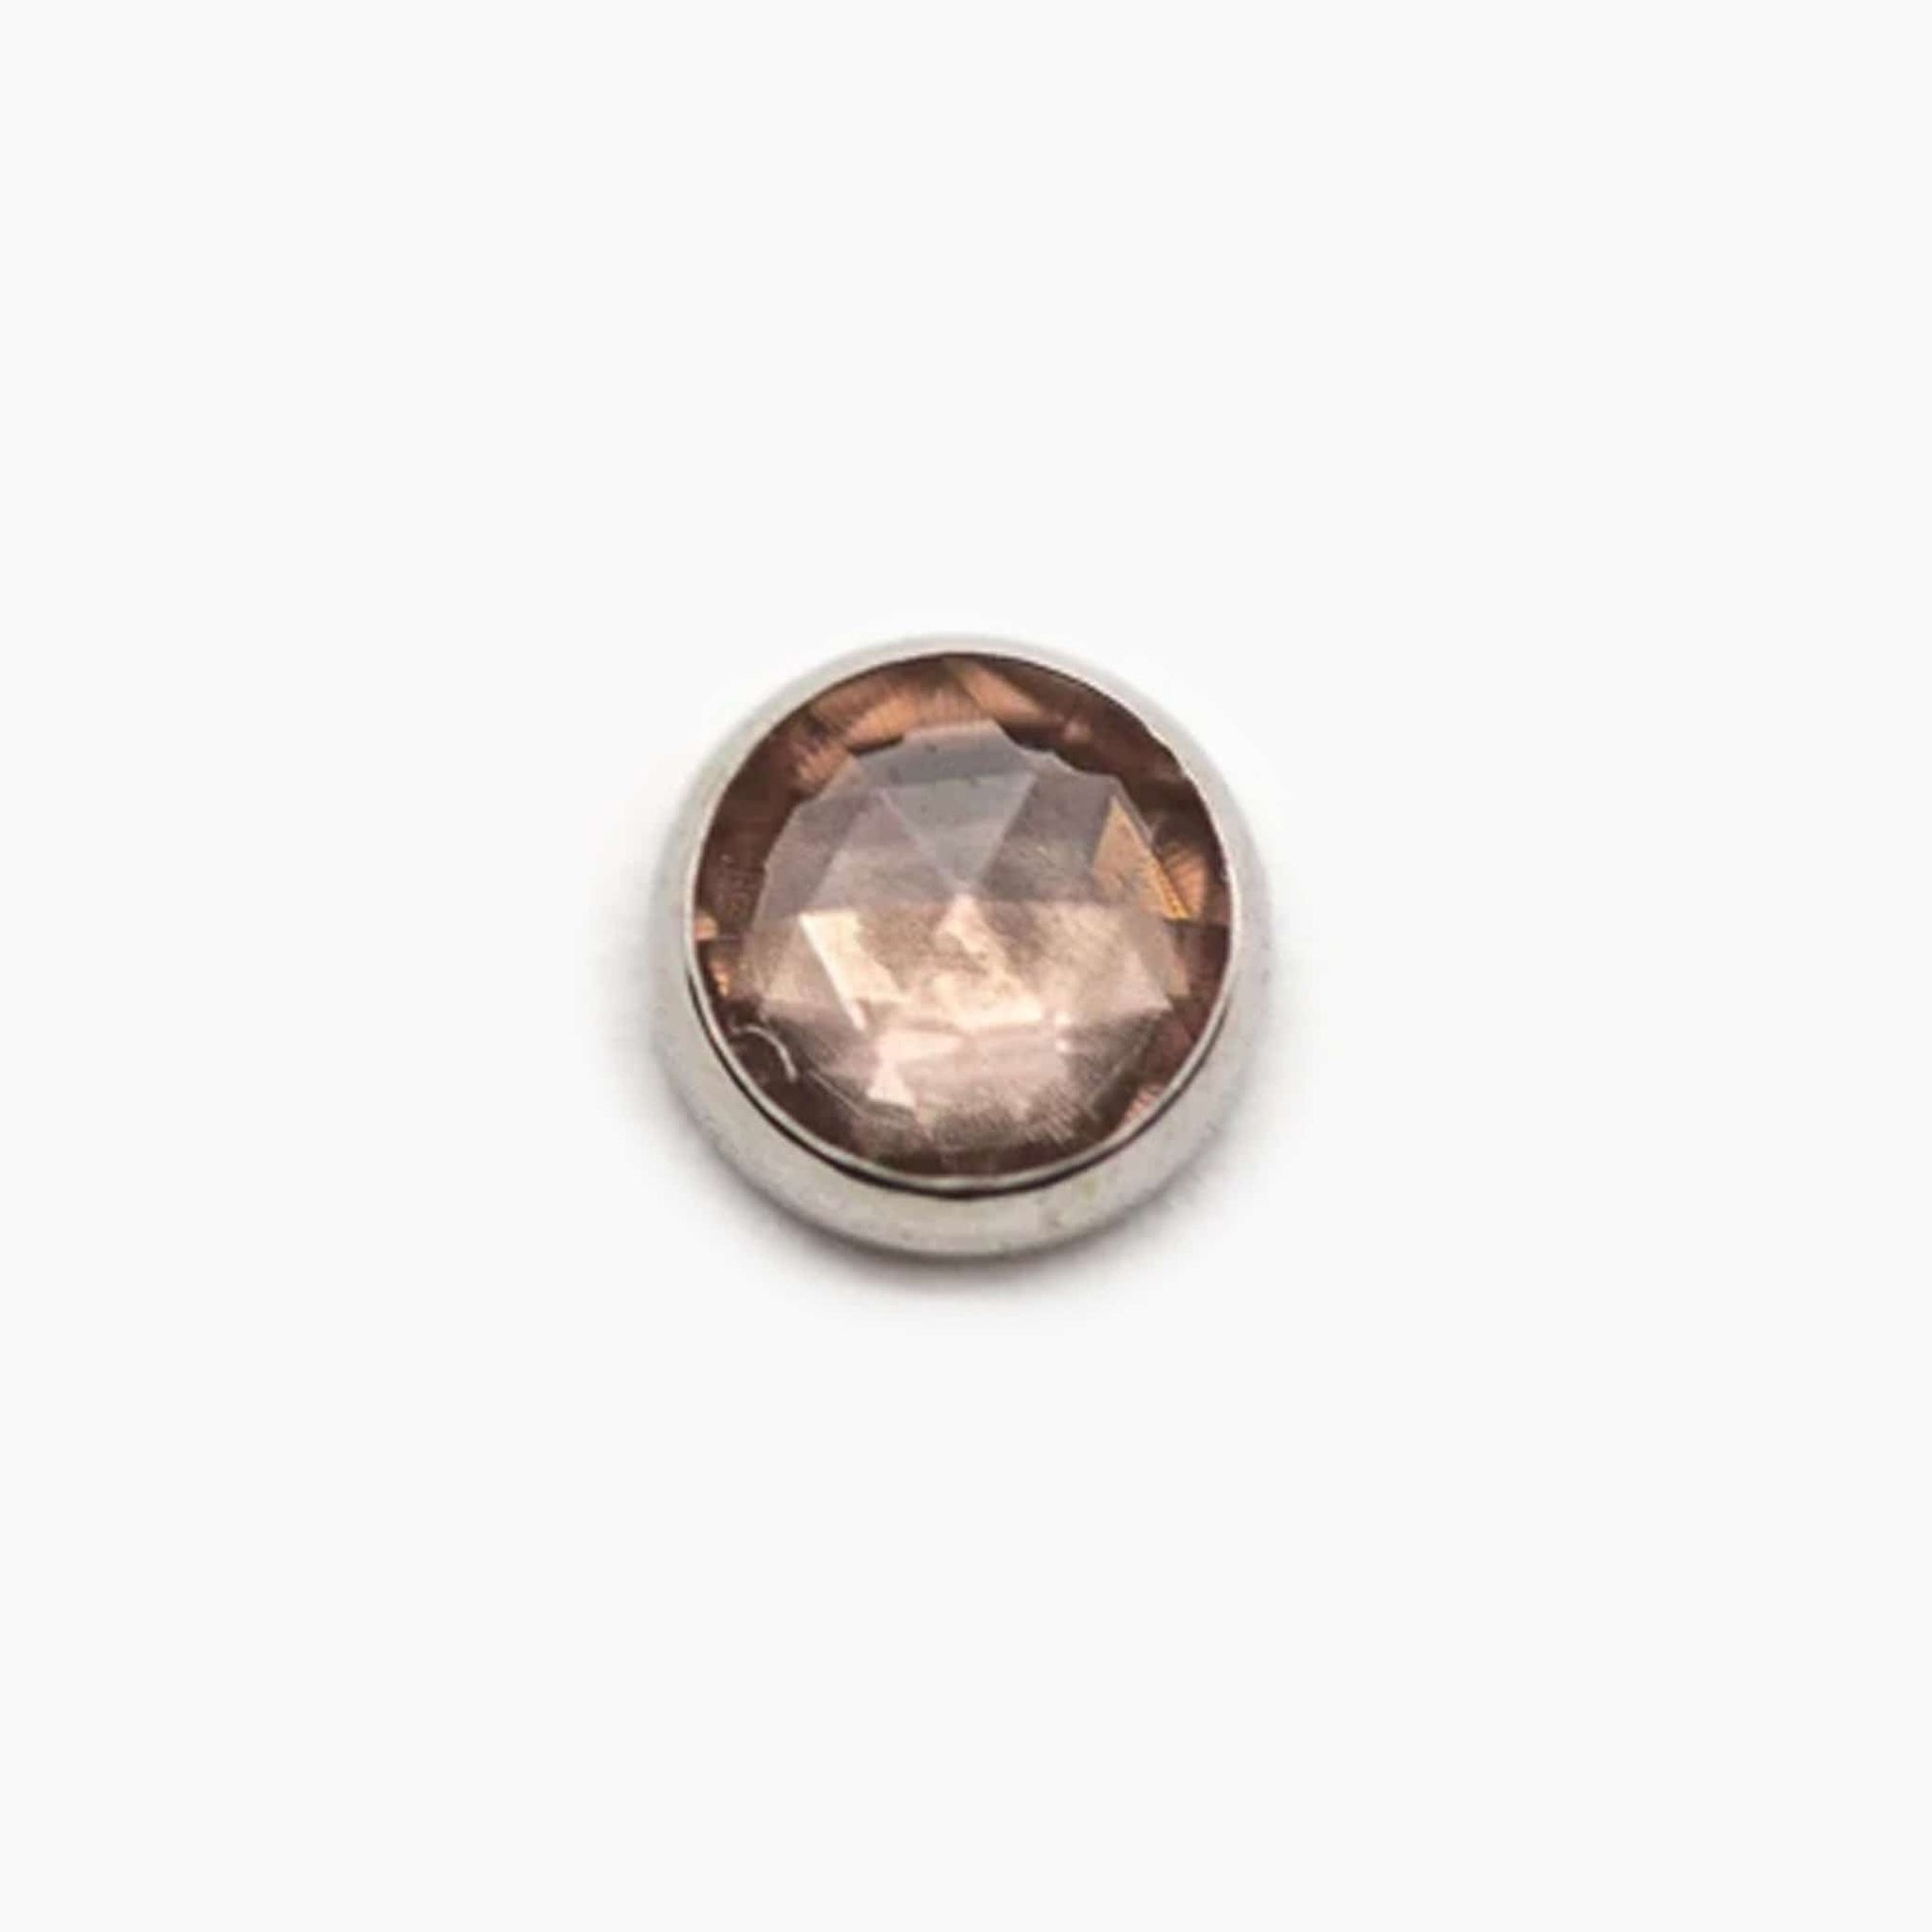 Cabochon Bezel Set Stone | Titanium Threadless Top For Nose, Ears & Lip - Avanti Body Jewelry